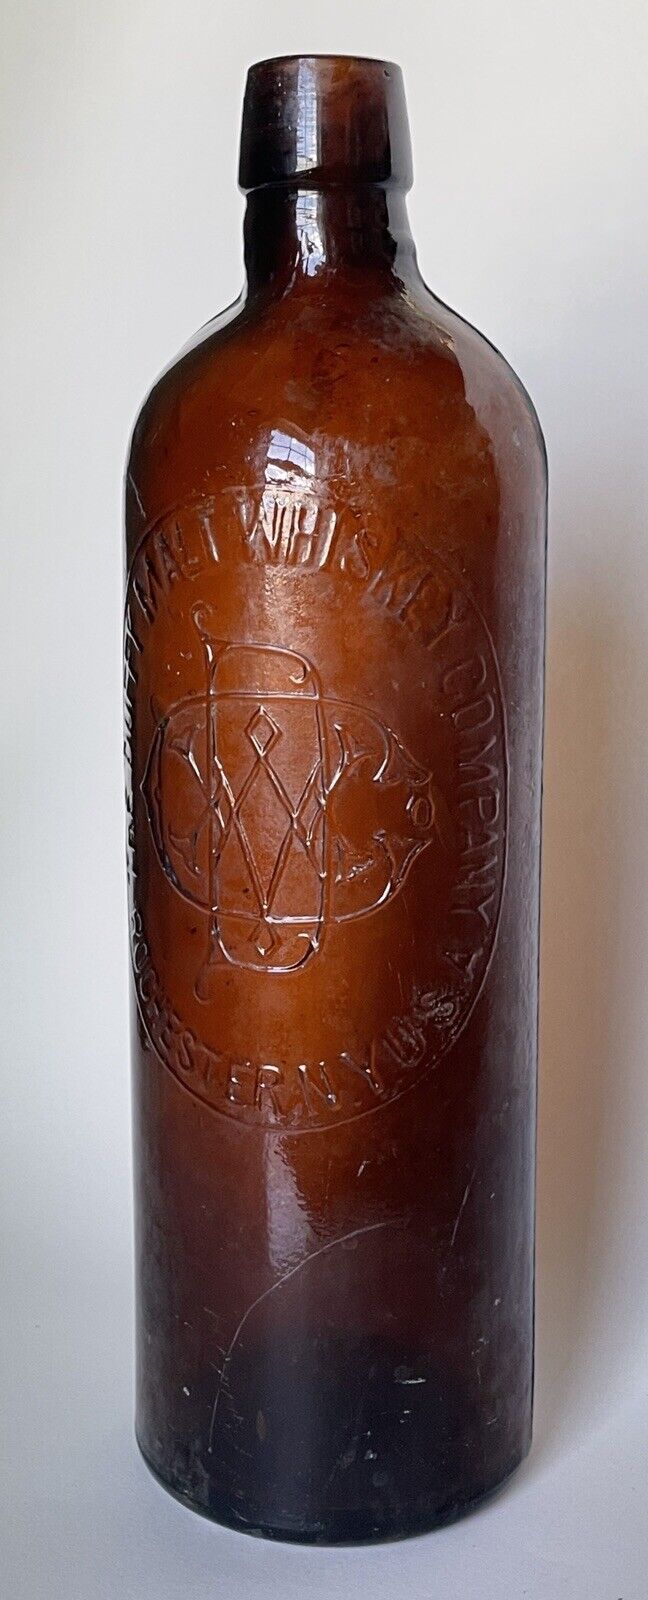 1886 Pat’d Antique Duffy's Malt Whiskey Bottle Rochester NY Glass Defect?